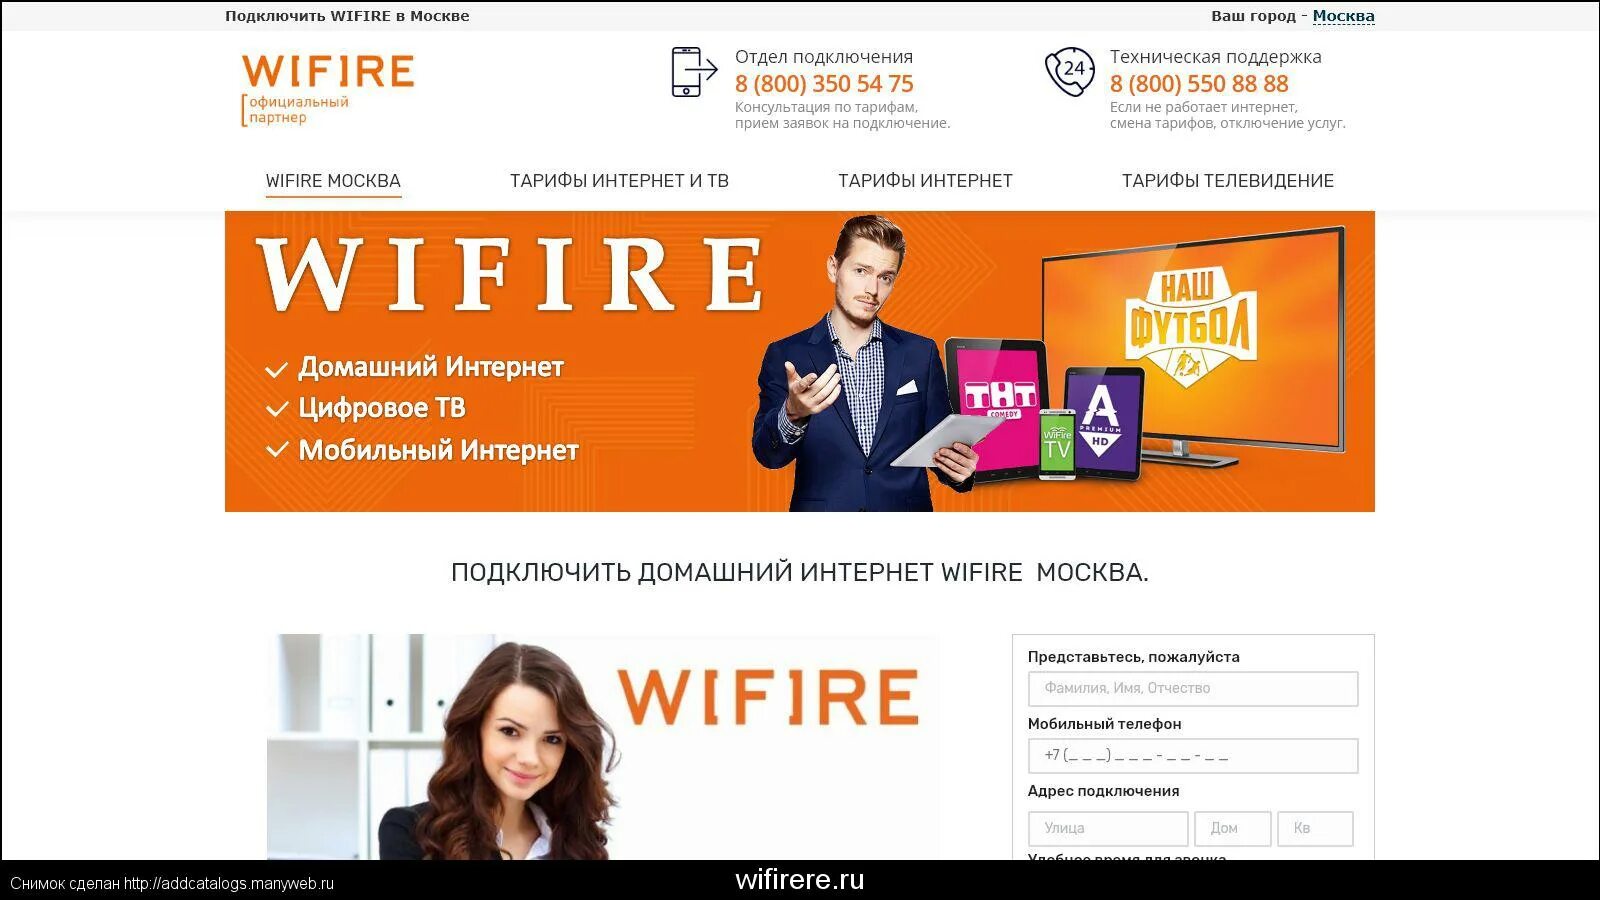 Интернет WIFIRE. WIFIRE мобильный интернет. WIFIRE номер телефона. Тарифы WIFIRE. Московский подключение интернета